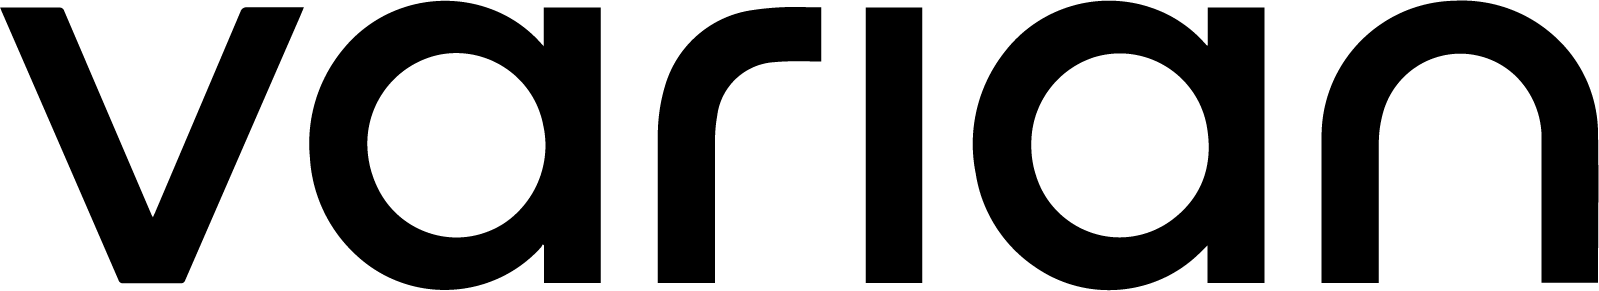 Varian Logo png